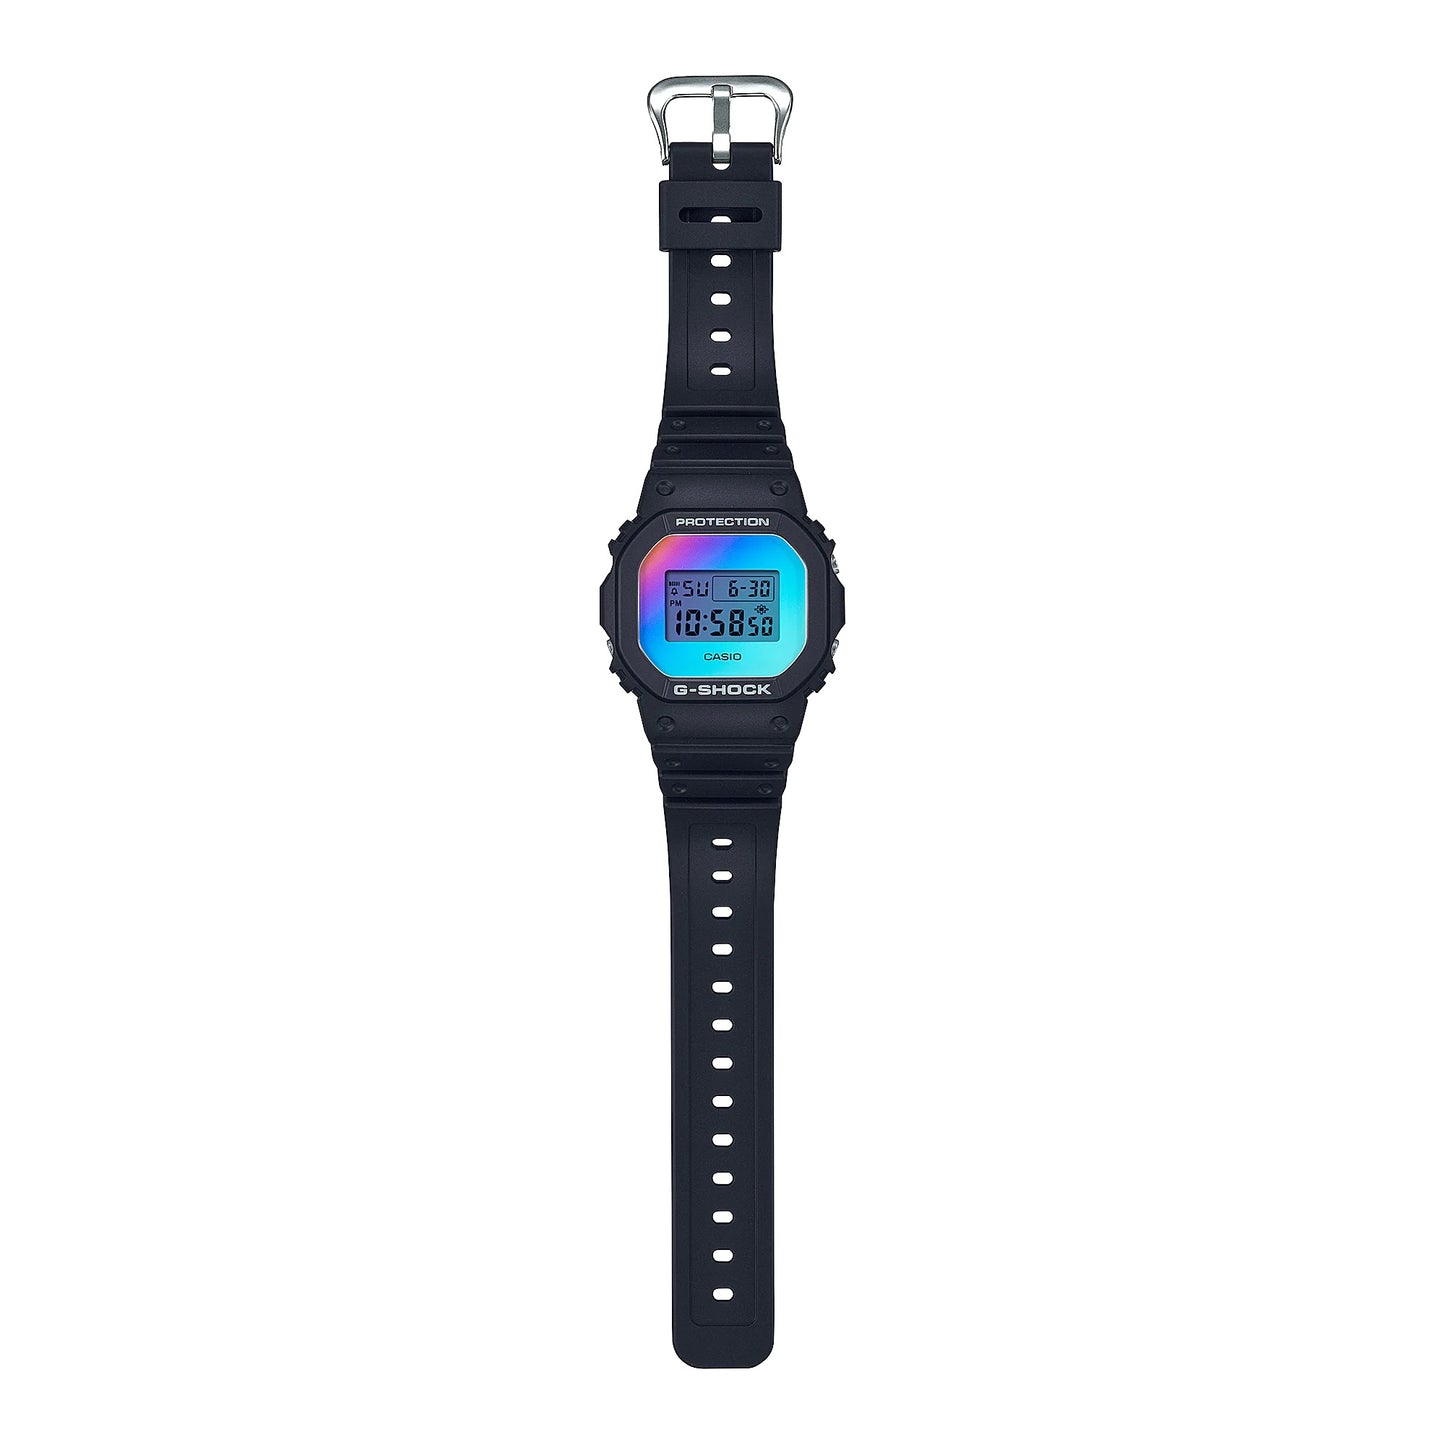 G-SHOCK 国内正規品 カシオ Gショック 腕時計 メンズ Iridescent Color シリーズ 樹脂バンド DW-5600SR-1JF